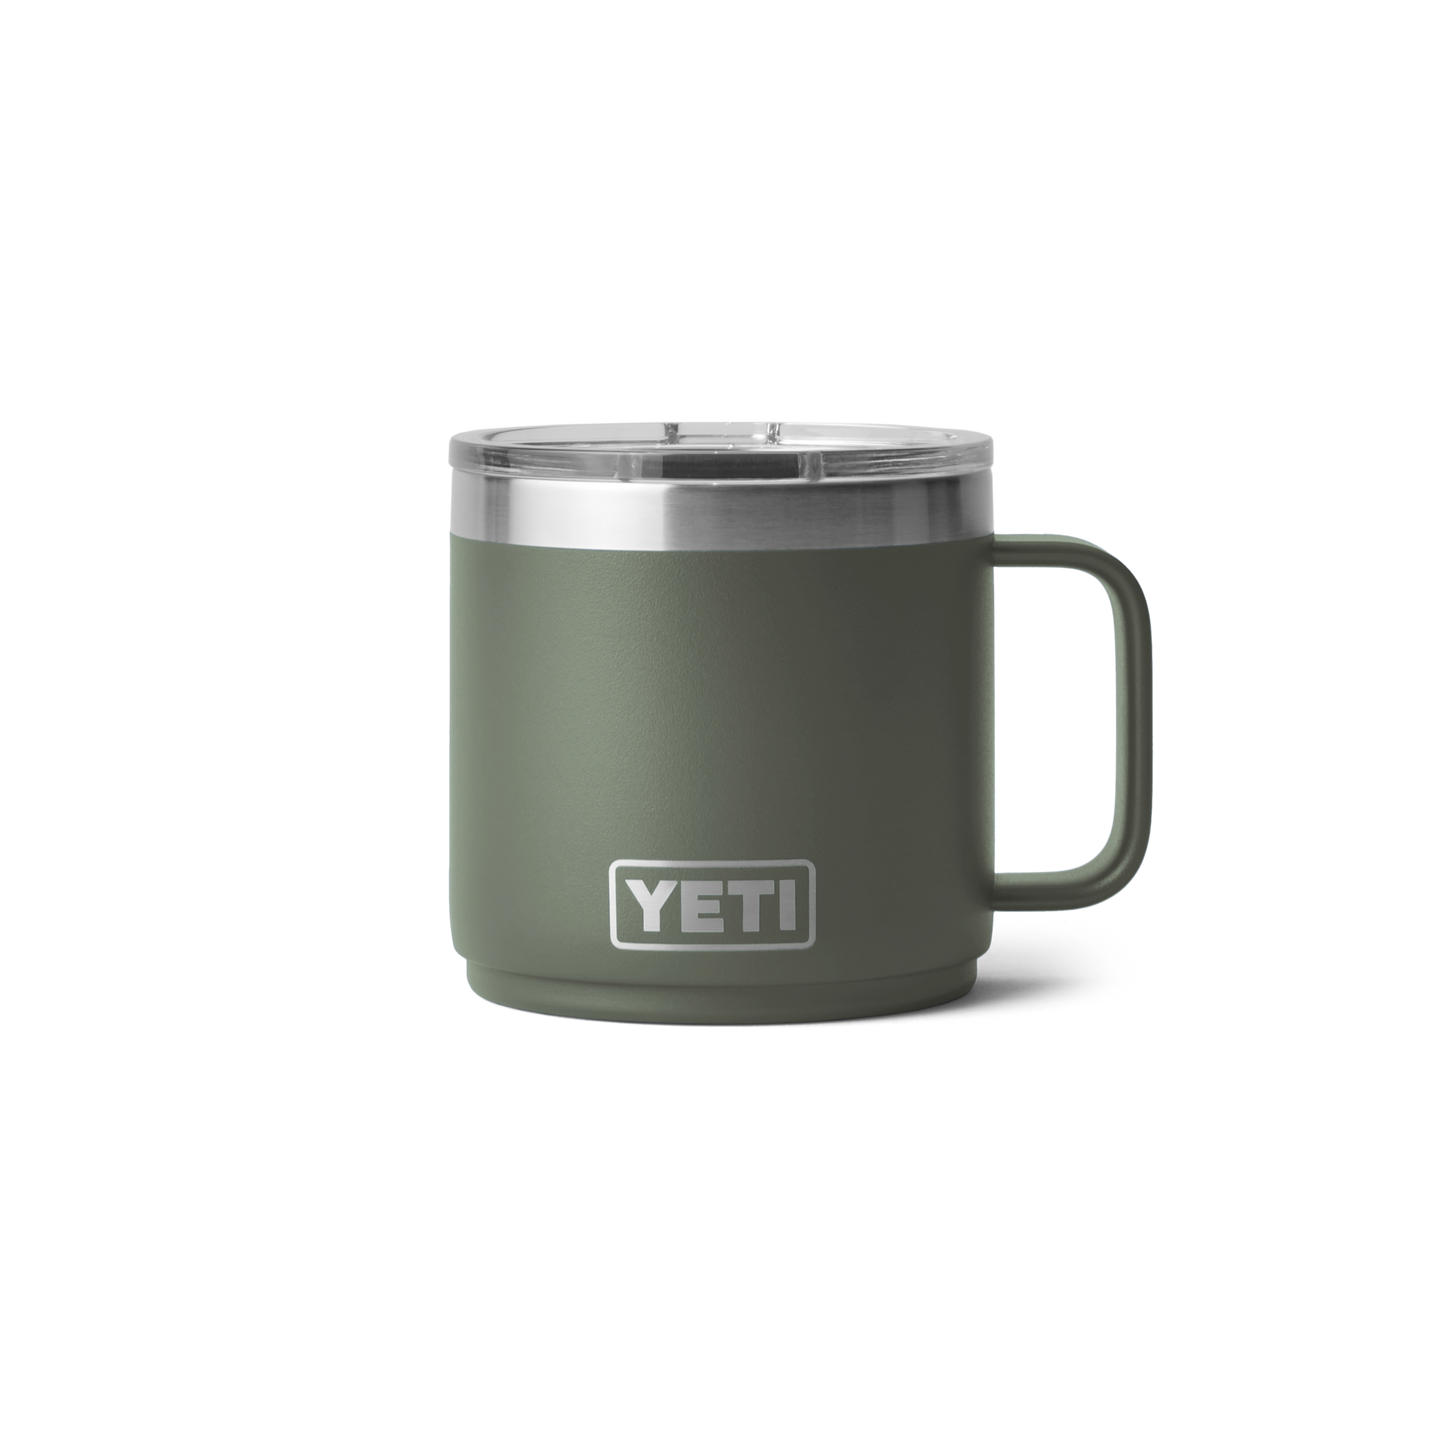 Electric Mug Warmer - The Tea Smith